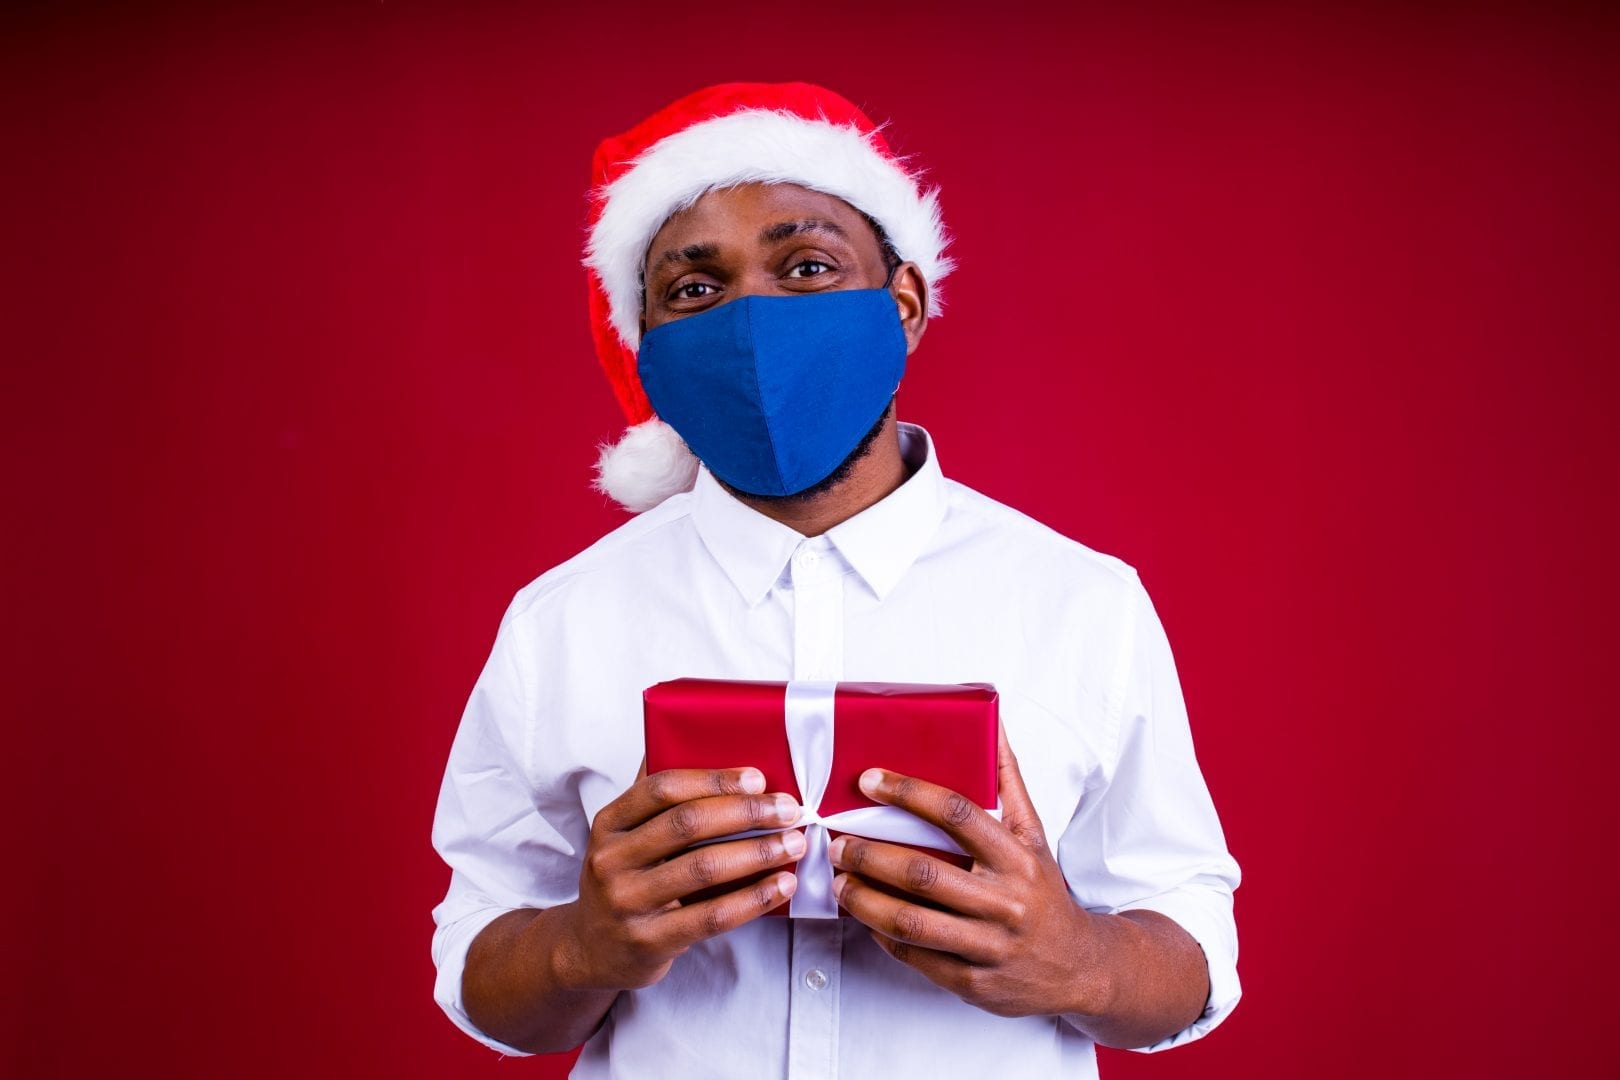 African American man in Santa's hat wearing mask in red studio background